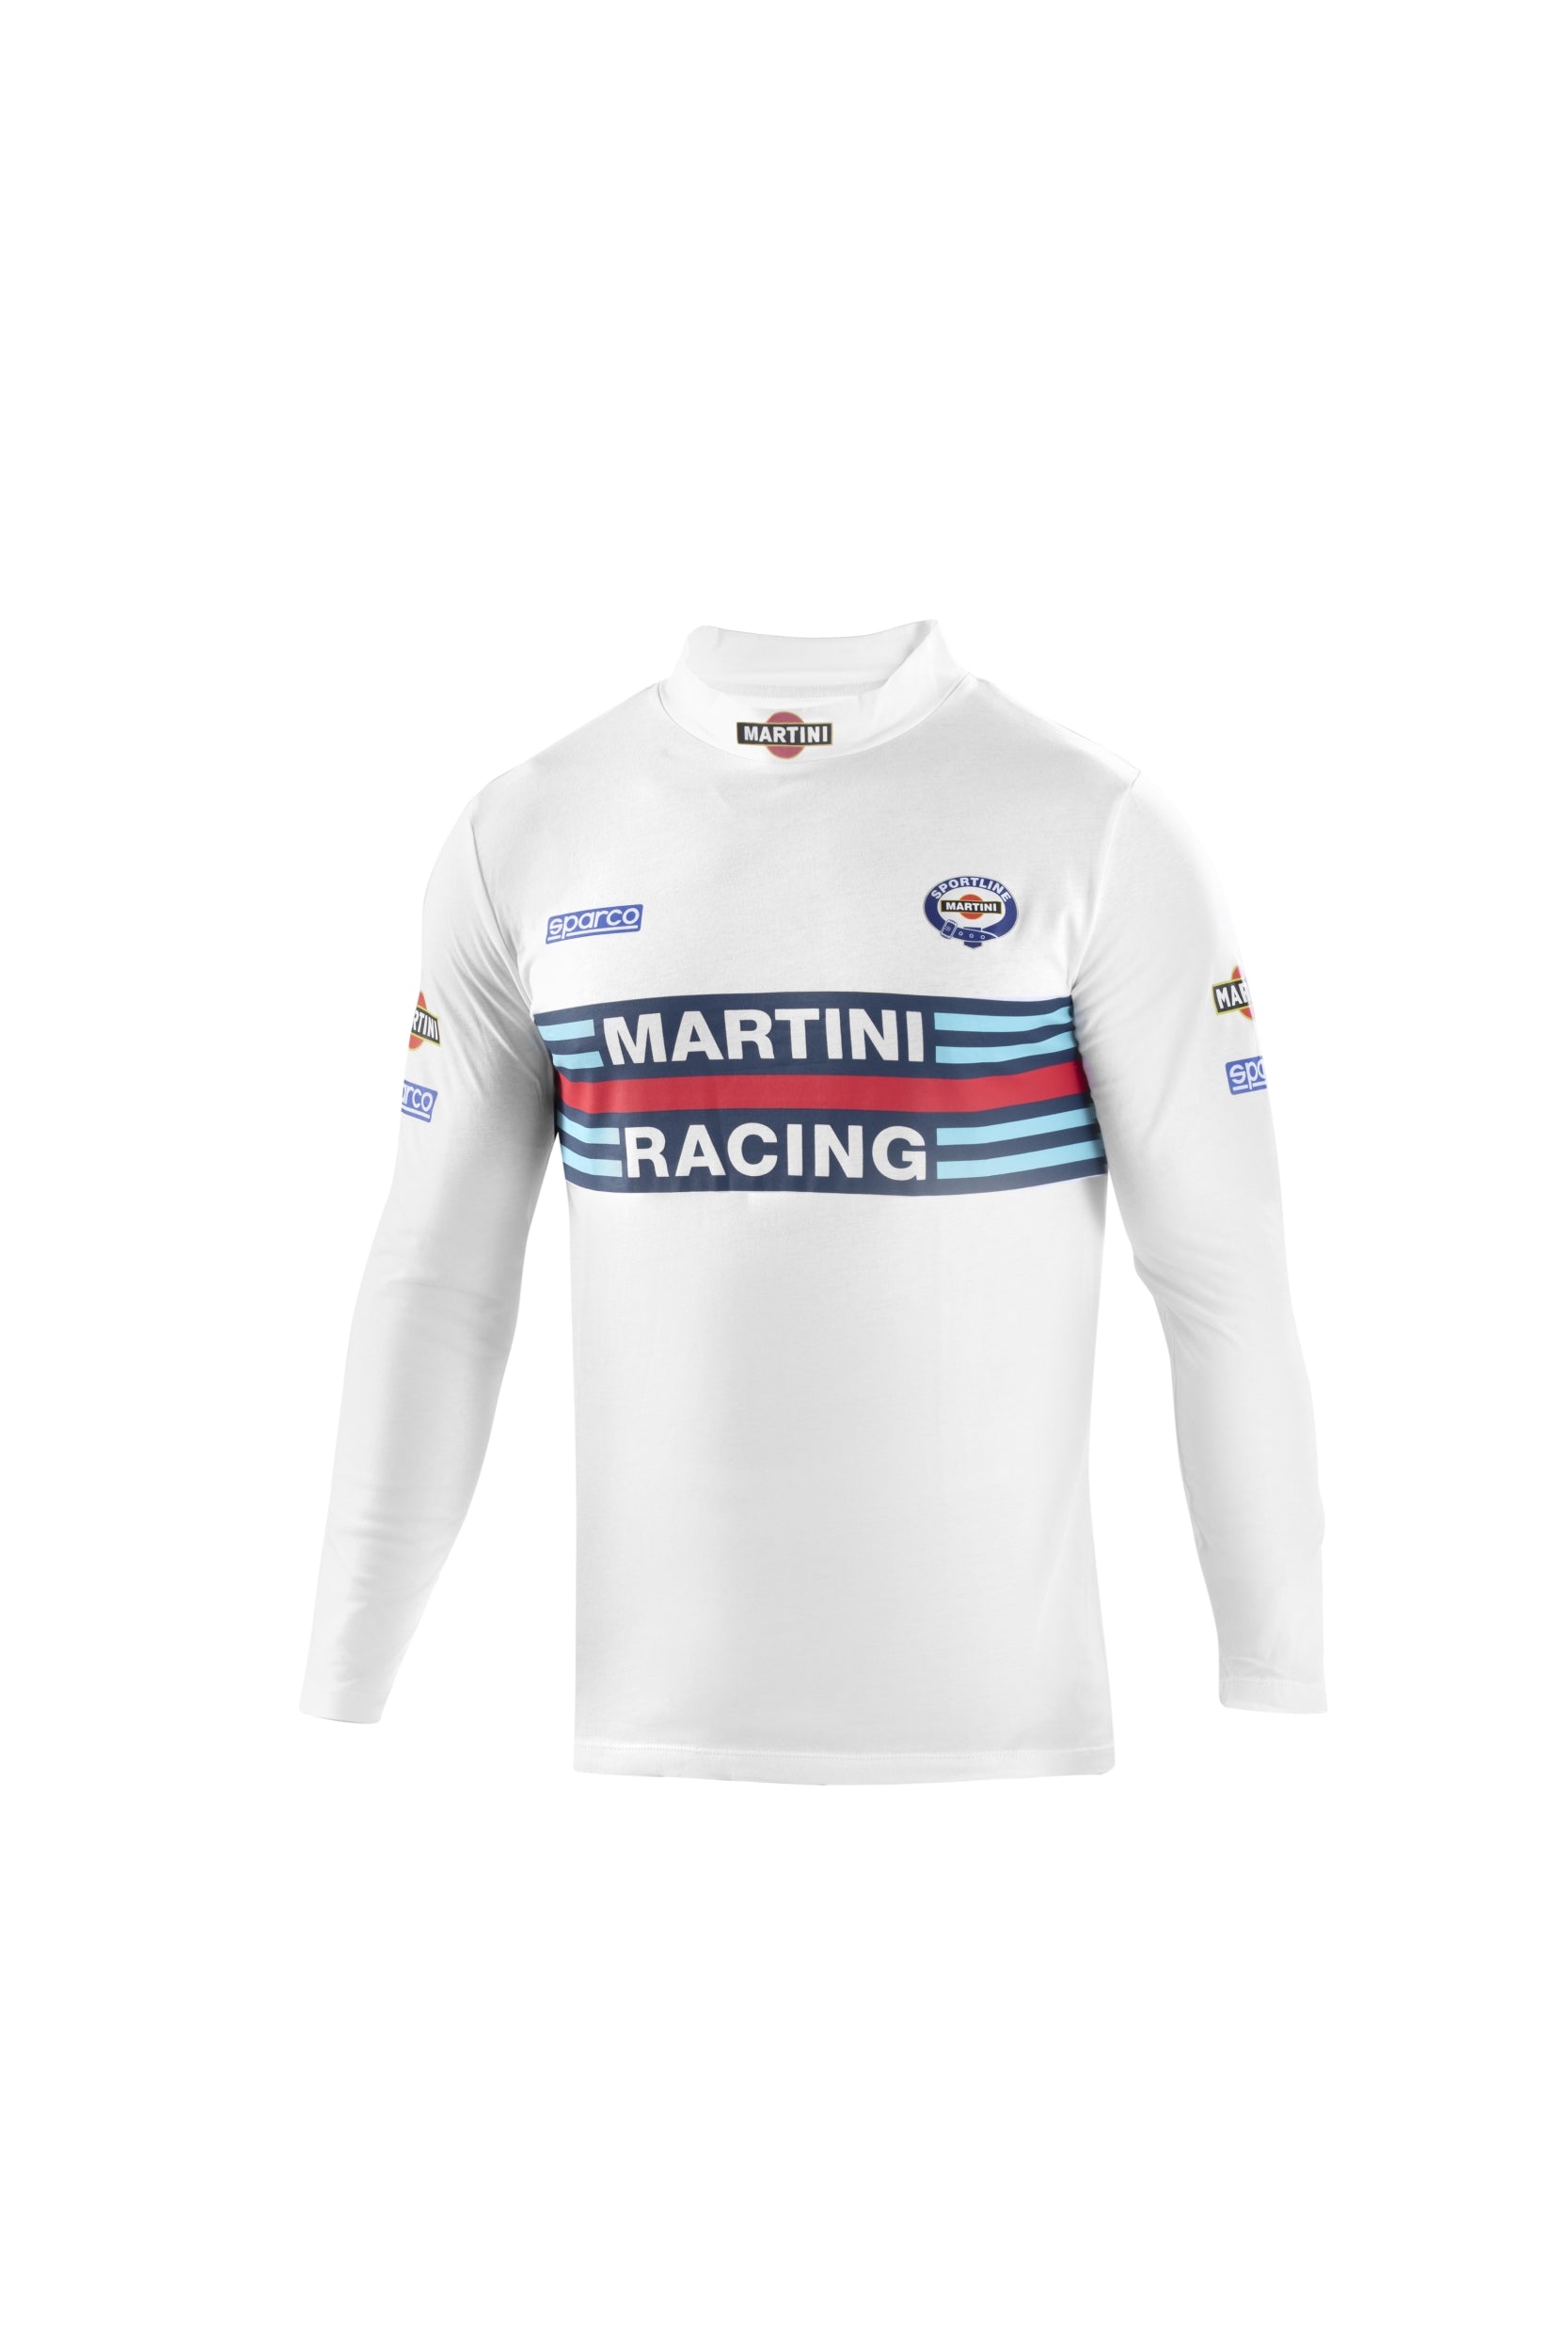 SPARCO 002206MRBI1S Long sleeves T-shirt MARTINI RACING, high collar, white, size S Photo-0 